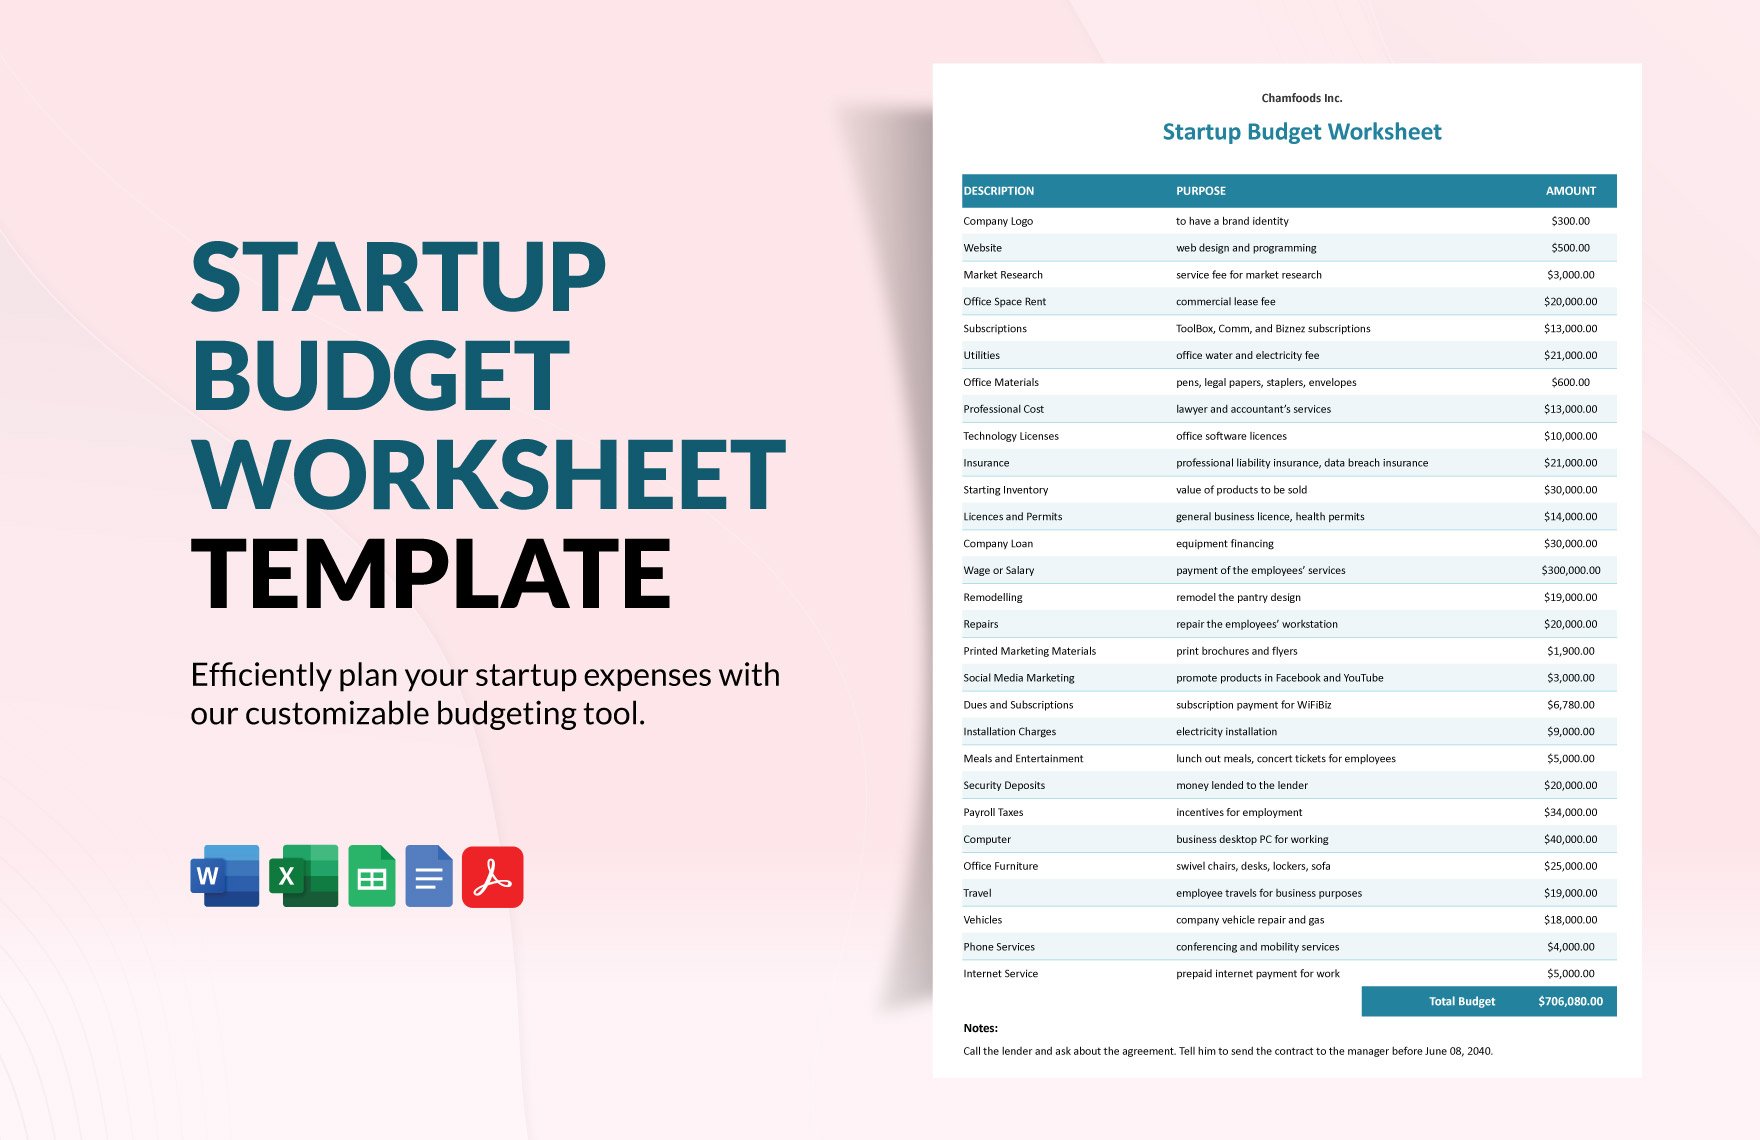 Startup Budget Worksheet Template